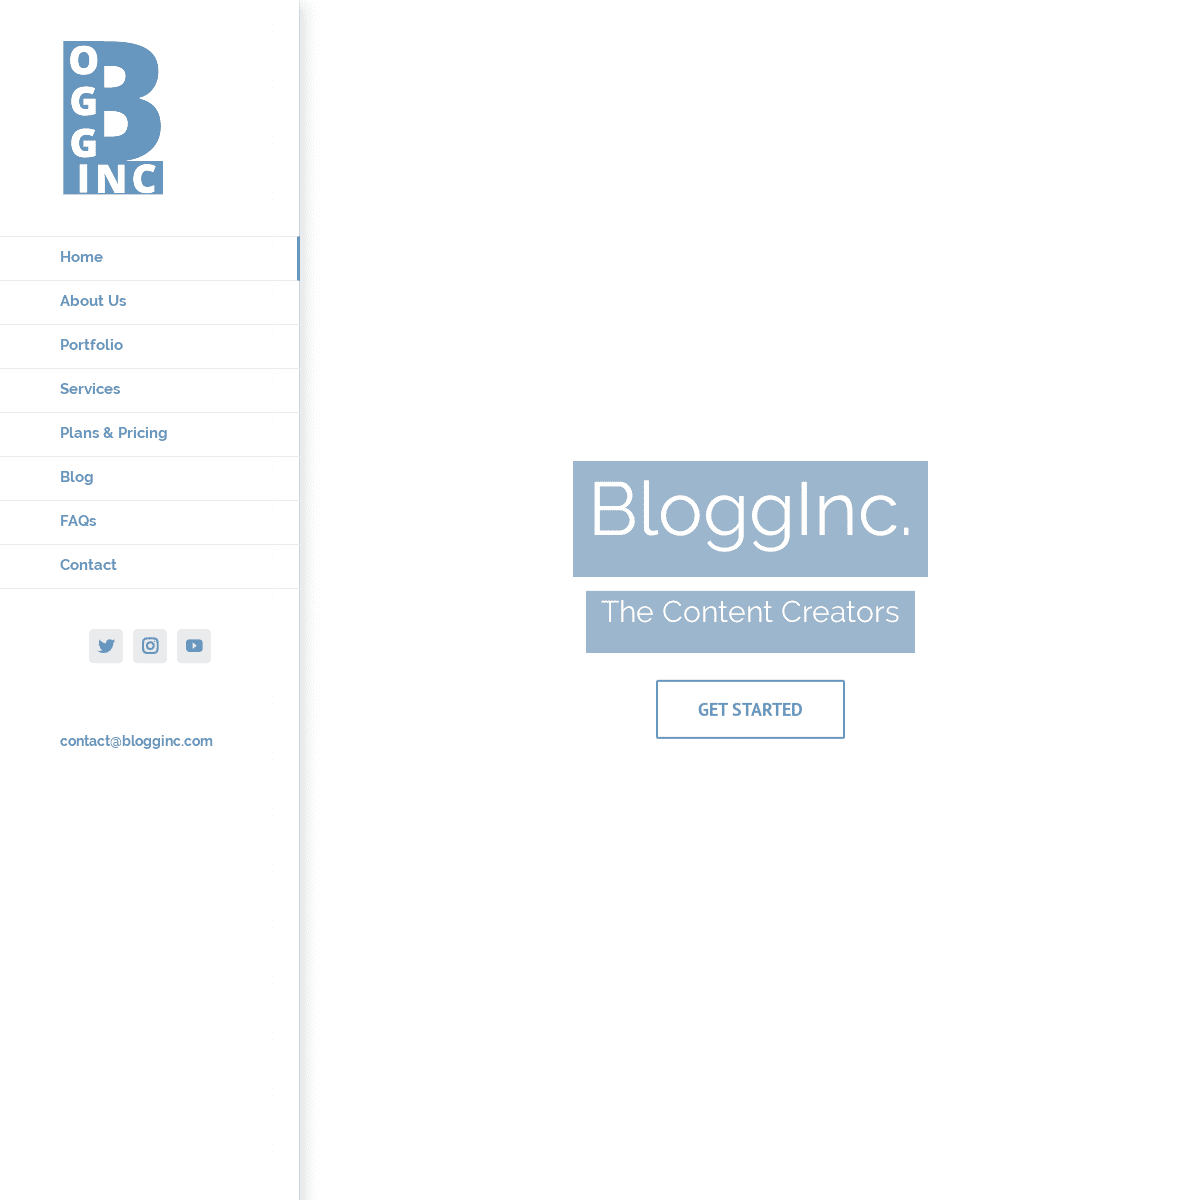 A complete backup of blogginc.com